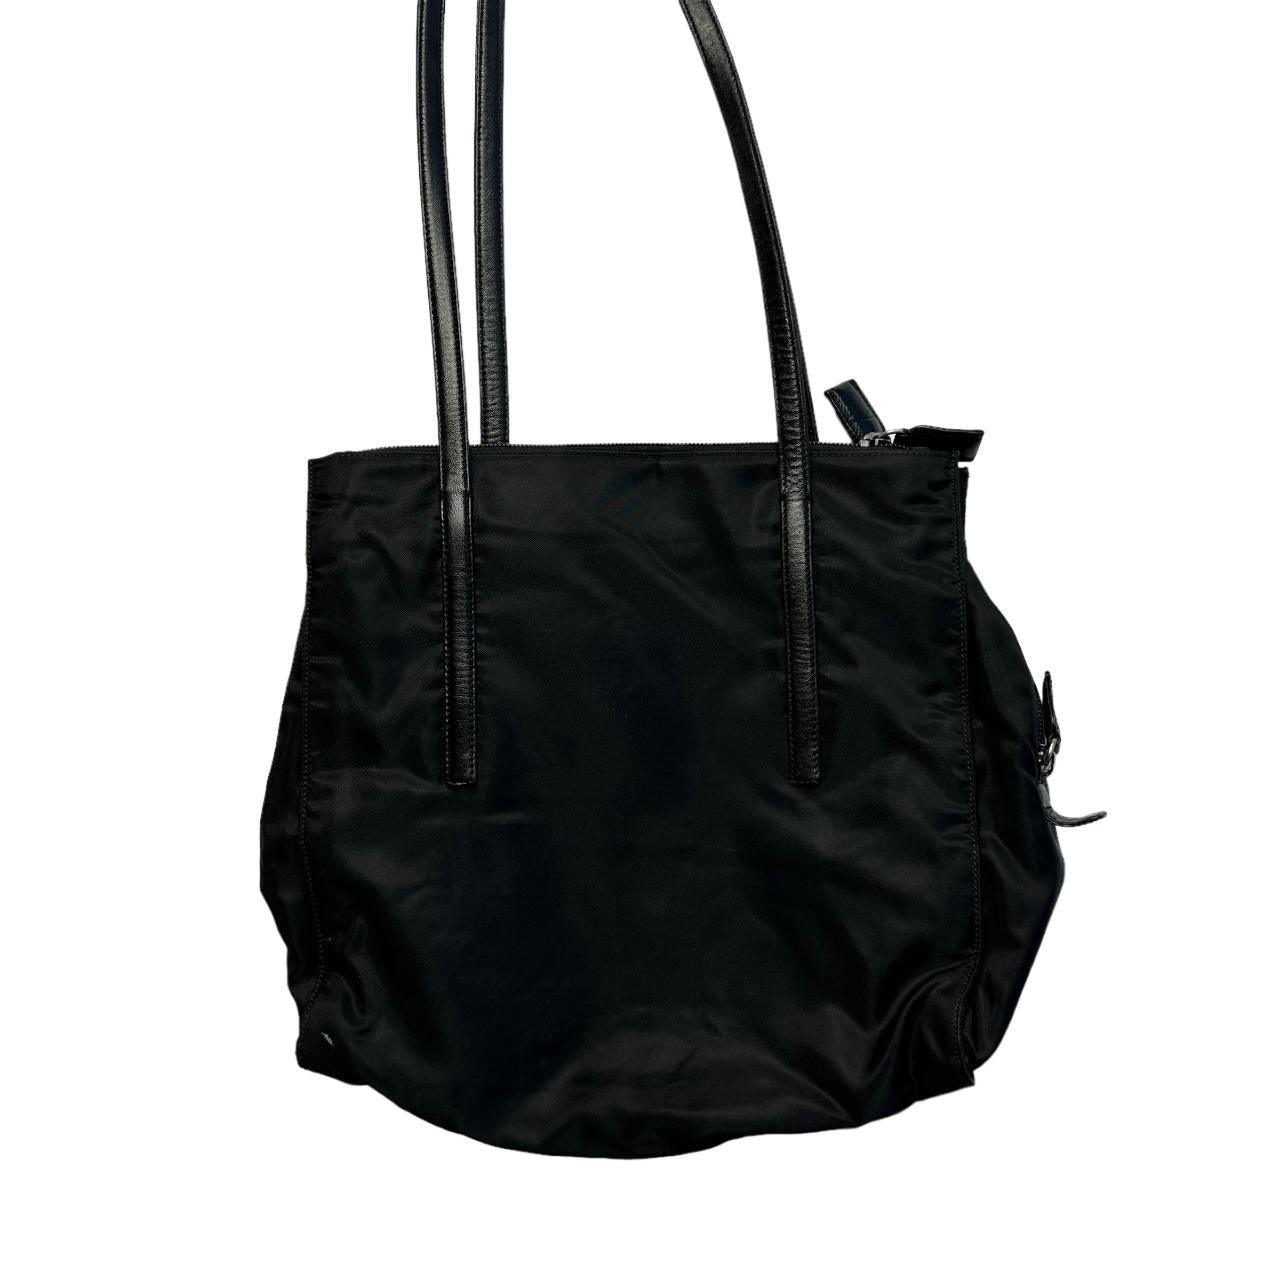 Prada nylon Black tote bag - Known Source